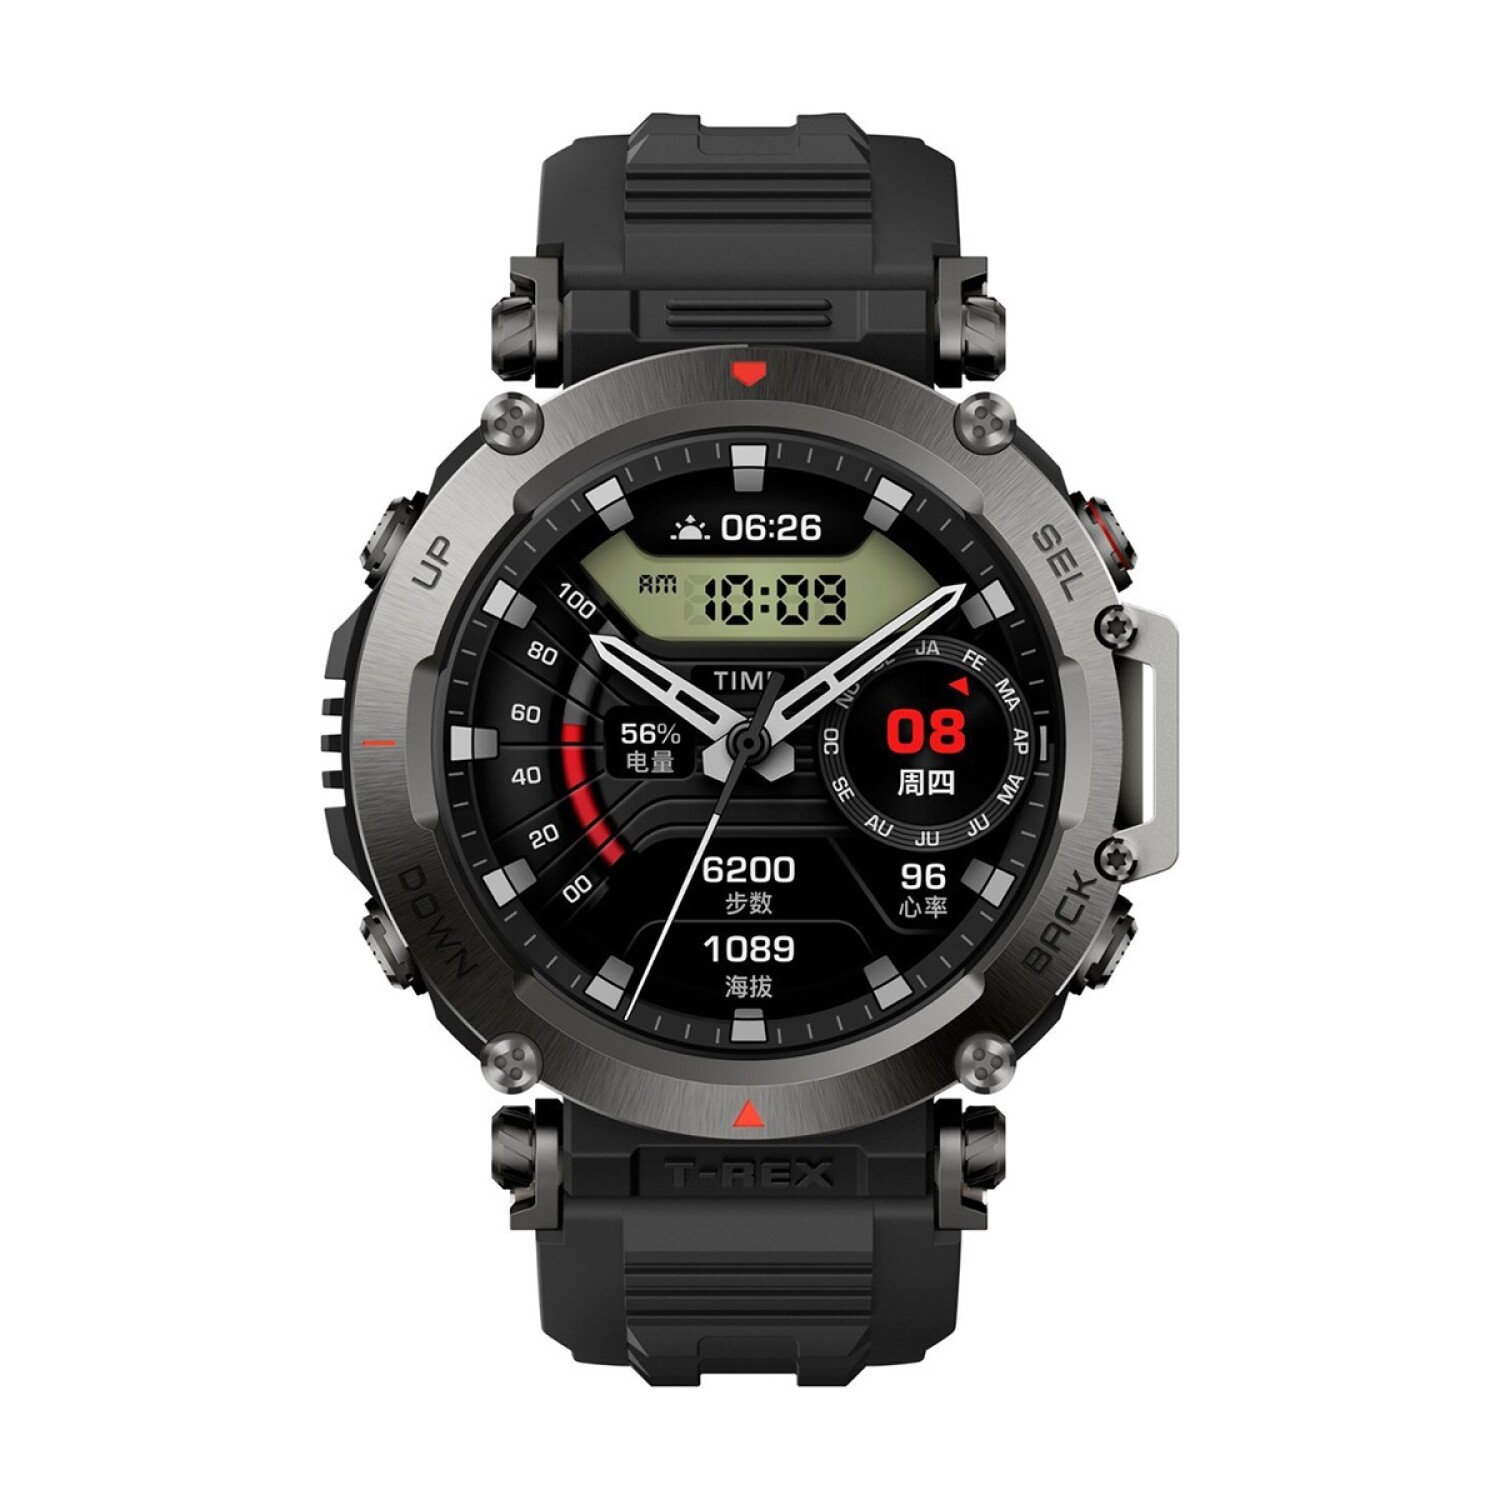 Usado Amazfit T-Rex Trex GPS Al Aire Libre Smartwatch Impermeable 390mAh  Reloj Inteligente Para Hombre Android iOS Phone 95-97 Nuevo Deportivo